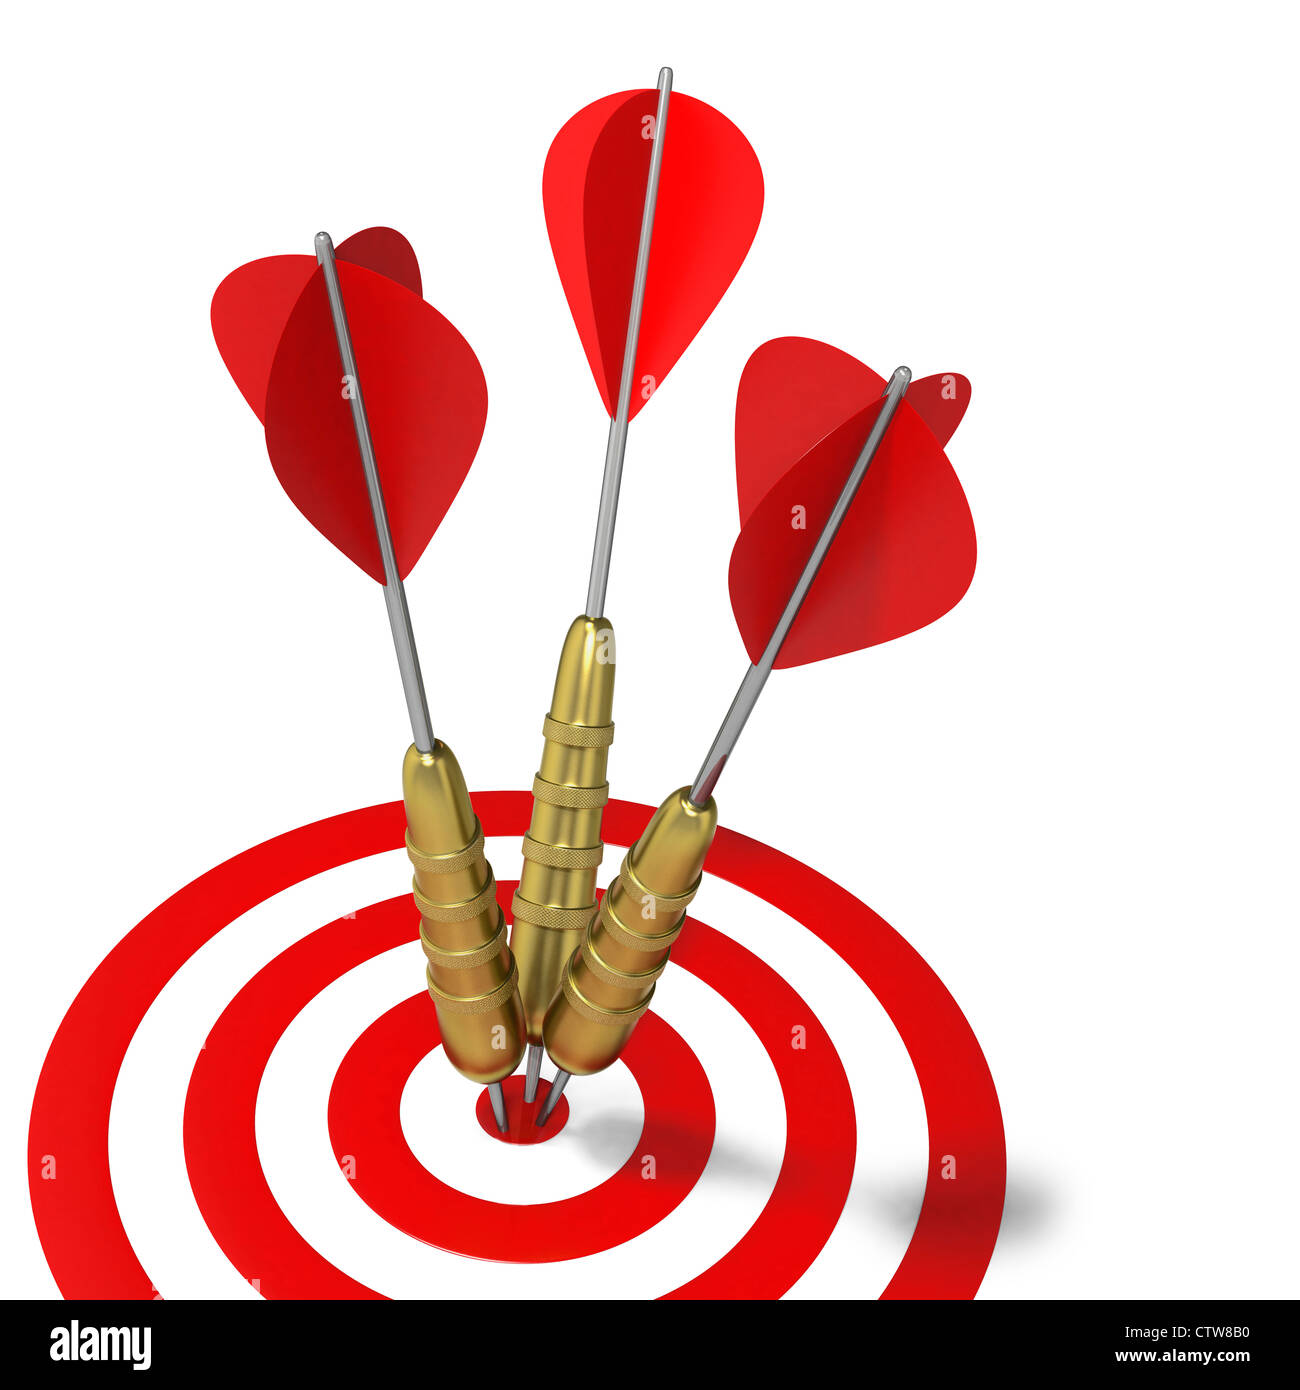 Three darts hitting the center mark on target or bulls eye Stock Photo